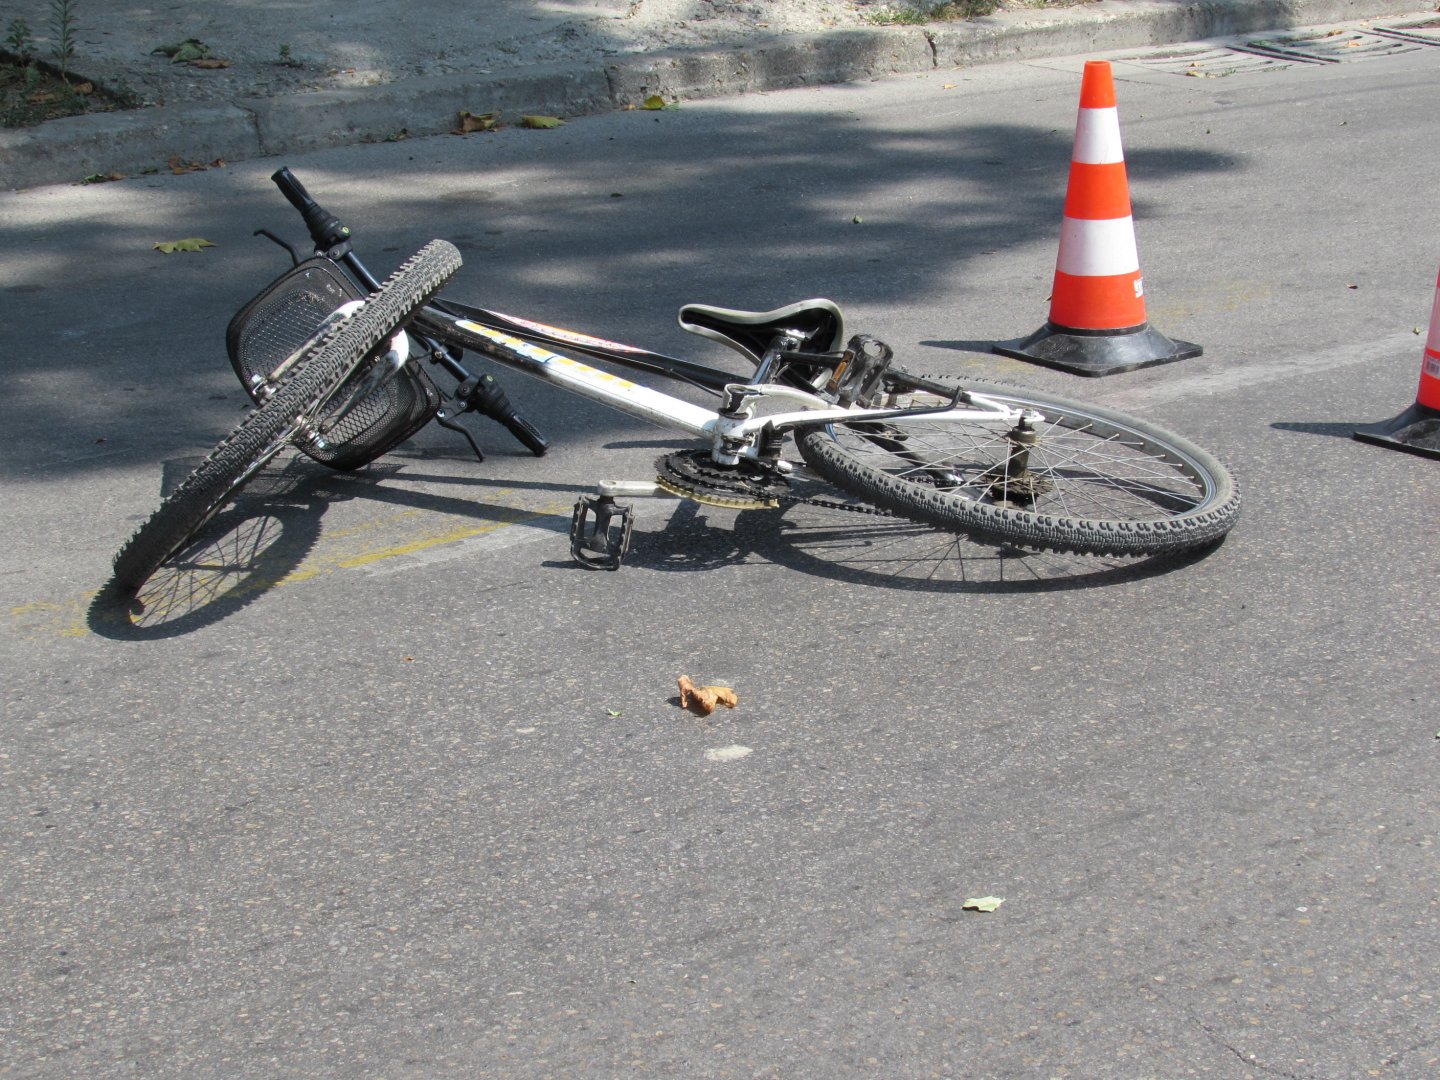 Автомобил блъсна дете с велосипед в „Лазур“ и избяга - E-Burgas.com